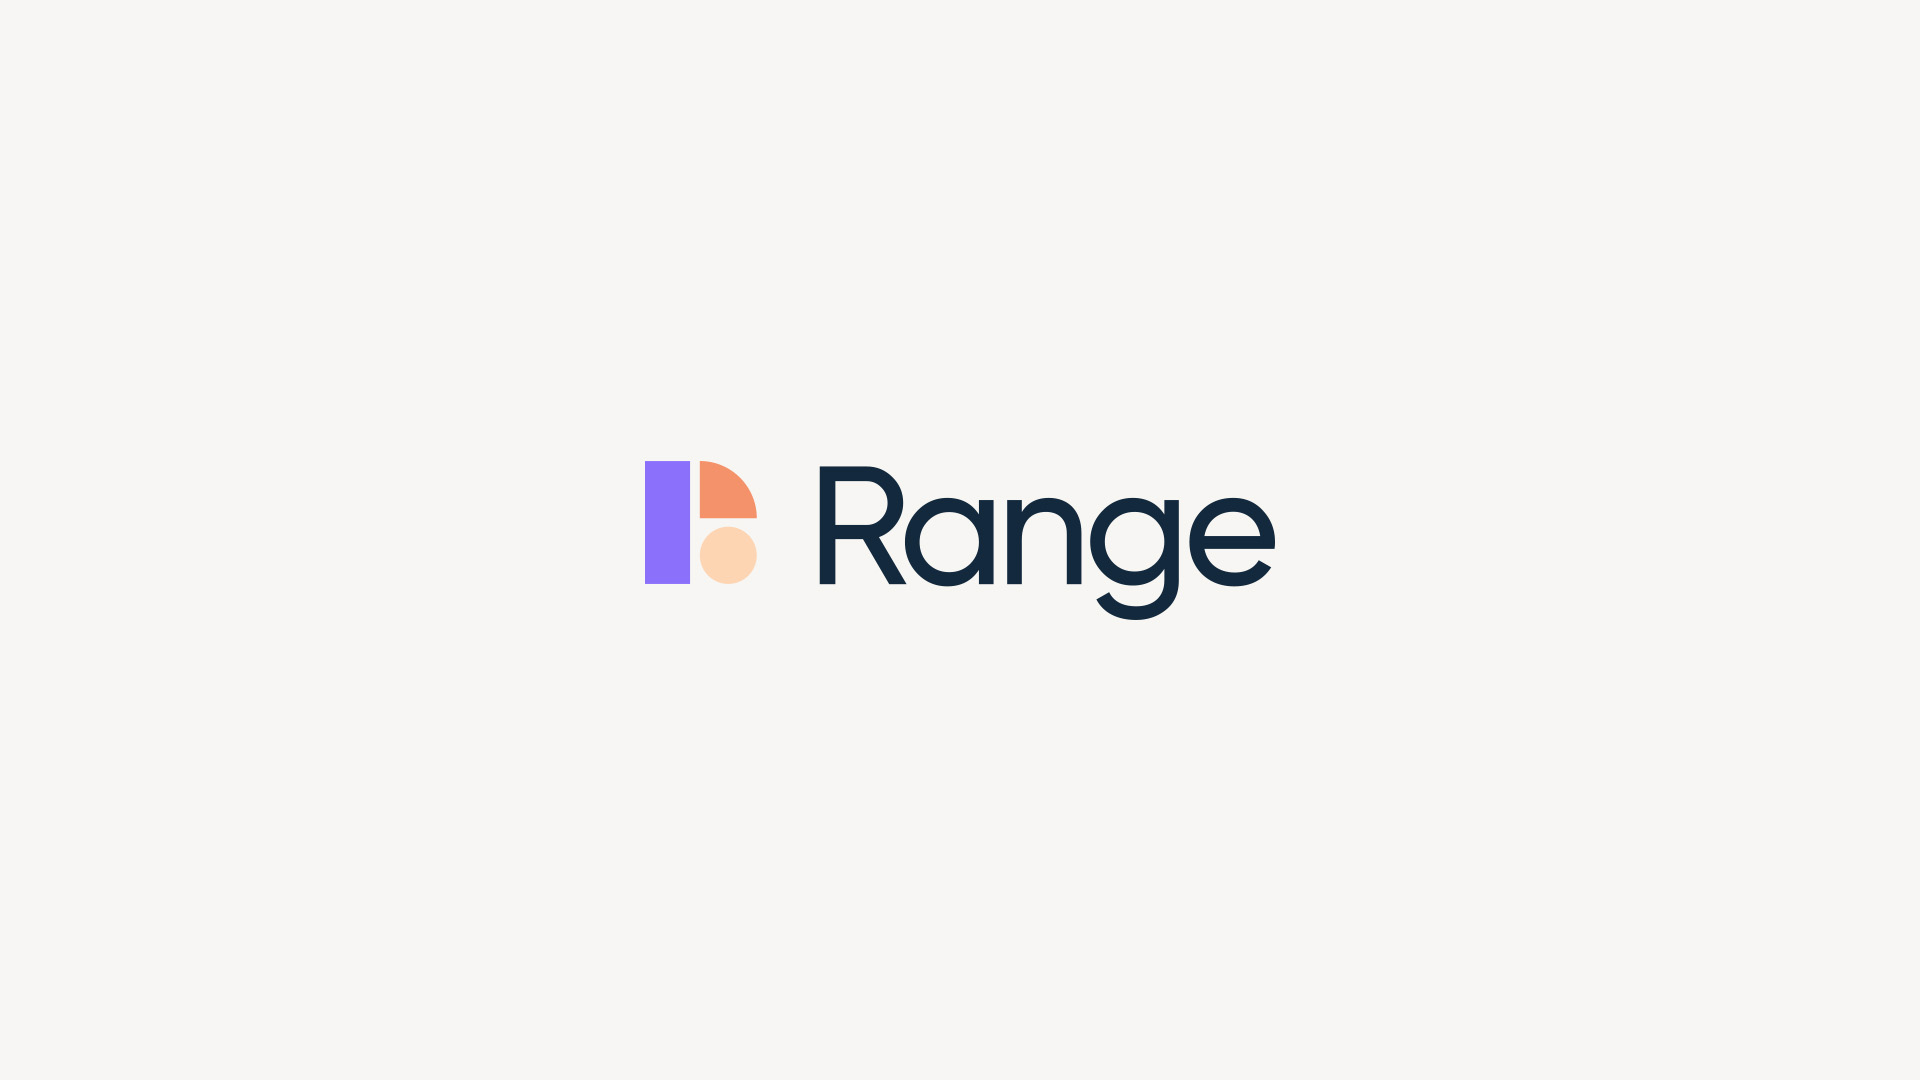 Range Physio Brand Identity Design - Logo and Colour Palette